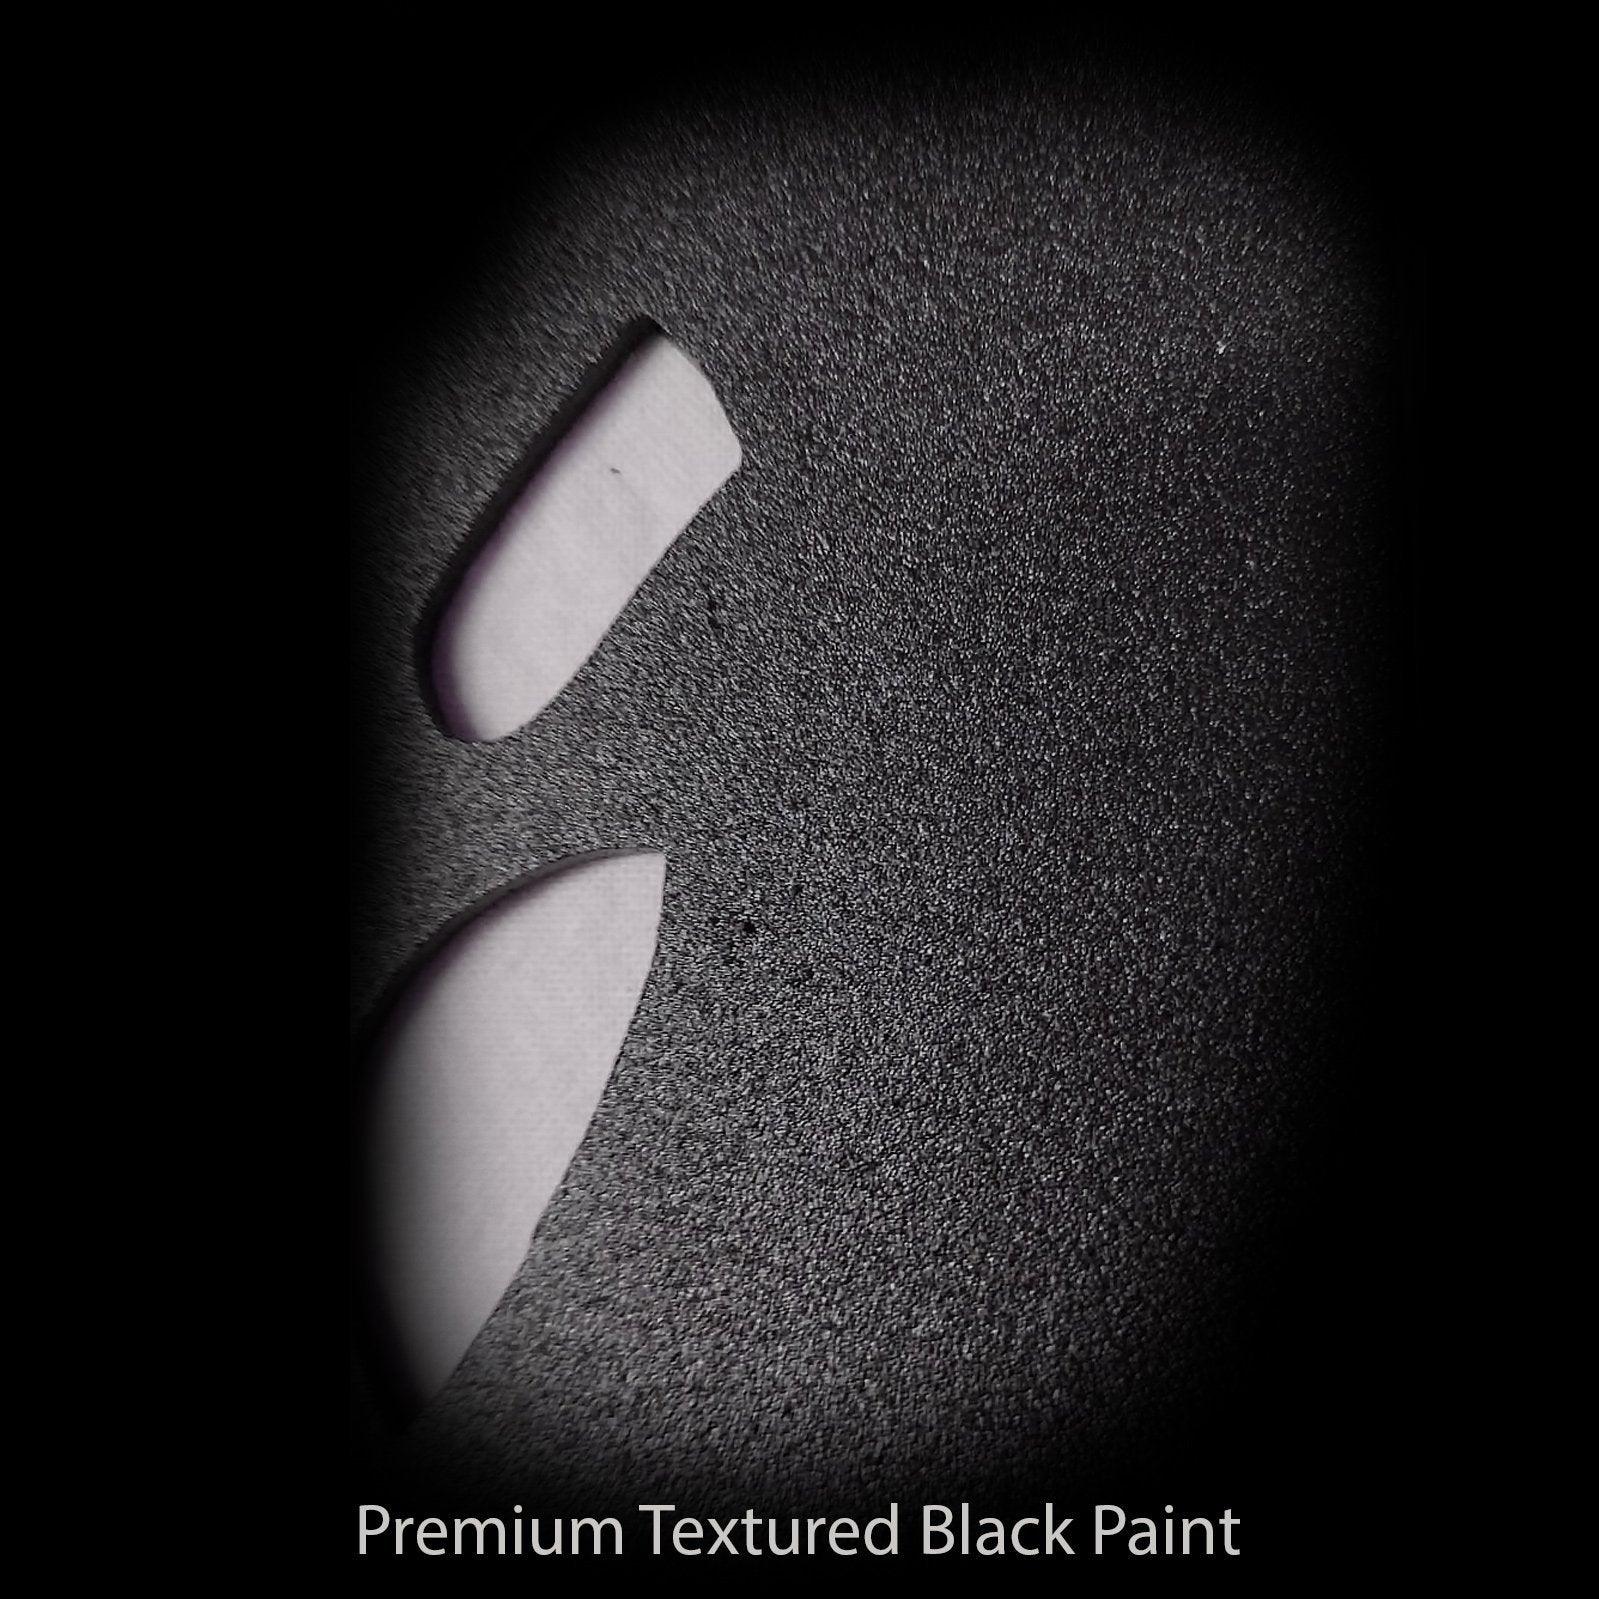 ・"Gorilla Face"・Premium Metal Wall Art - Limited Edition - ArtDesigna Glass Printing Wall Art